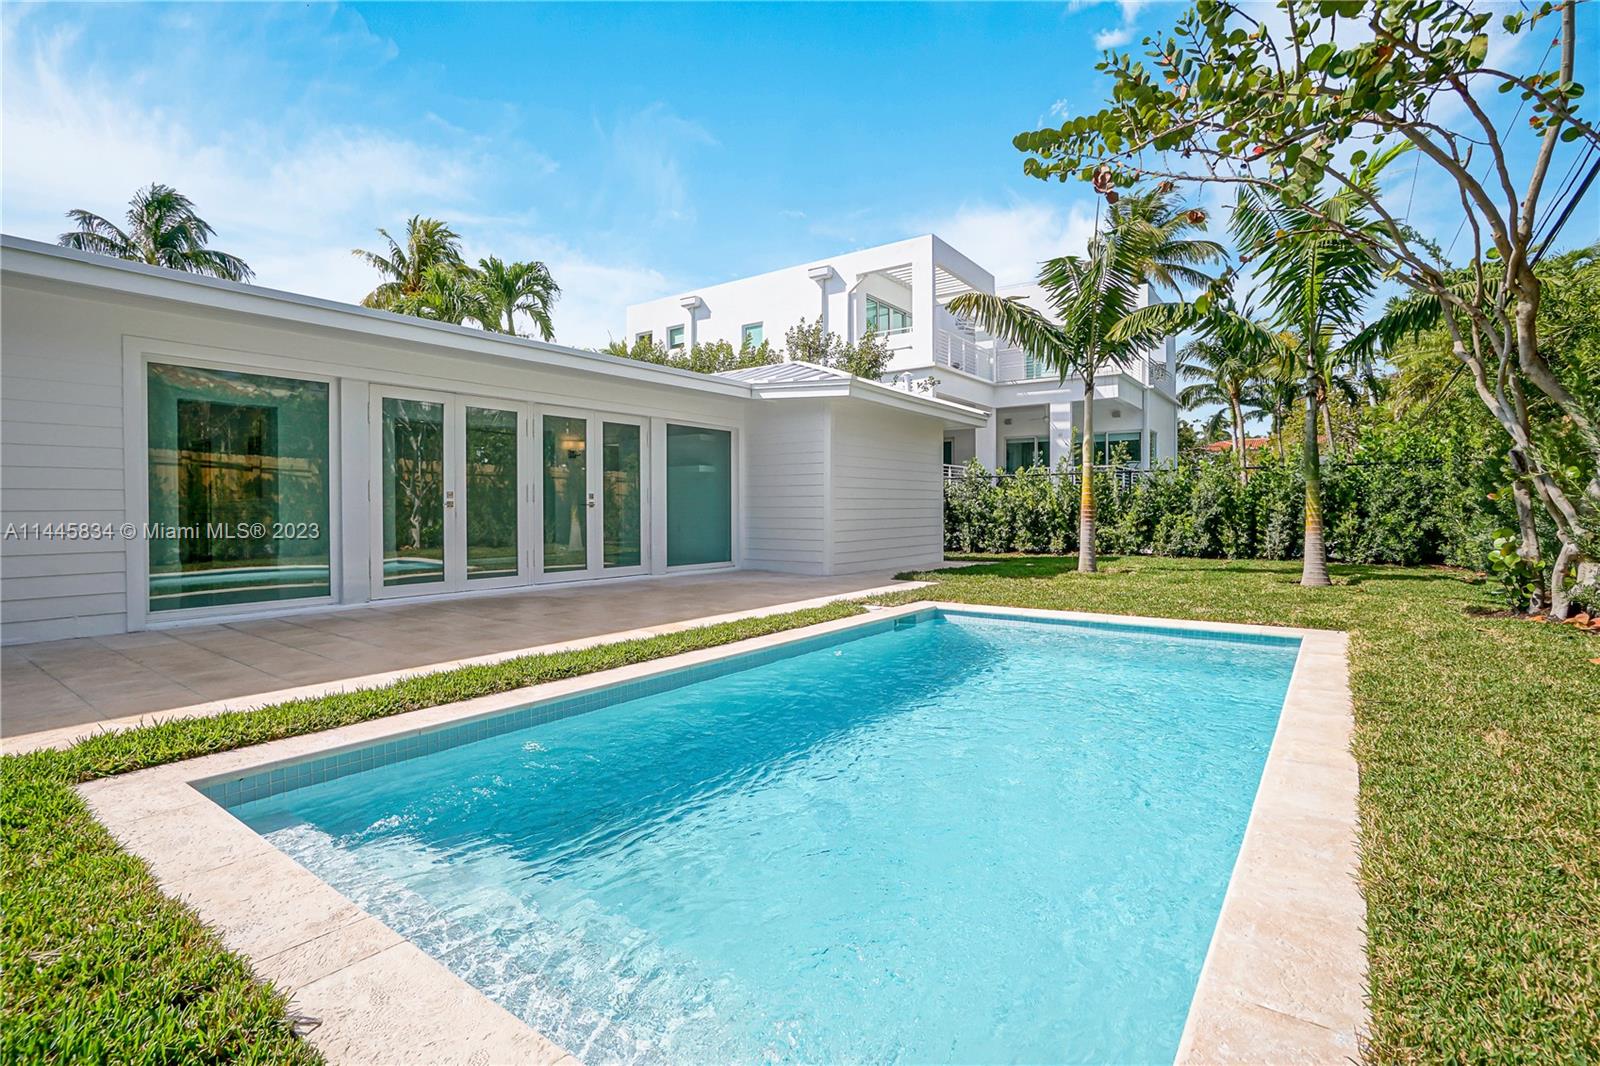 Key Biscayne Vacation Rentals, Miami: house rentals & more